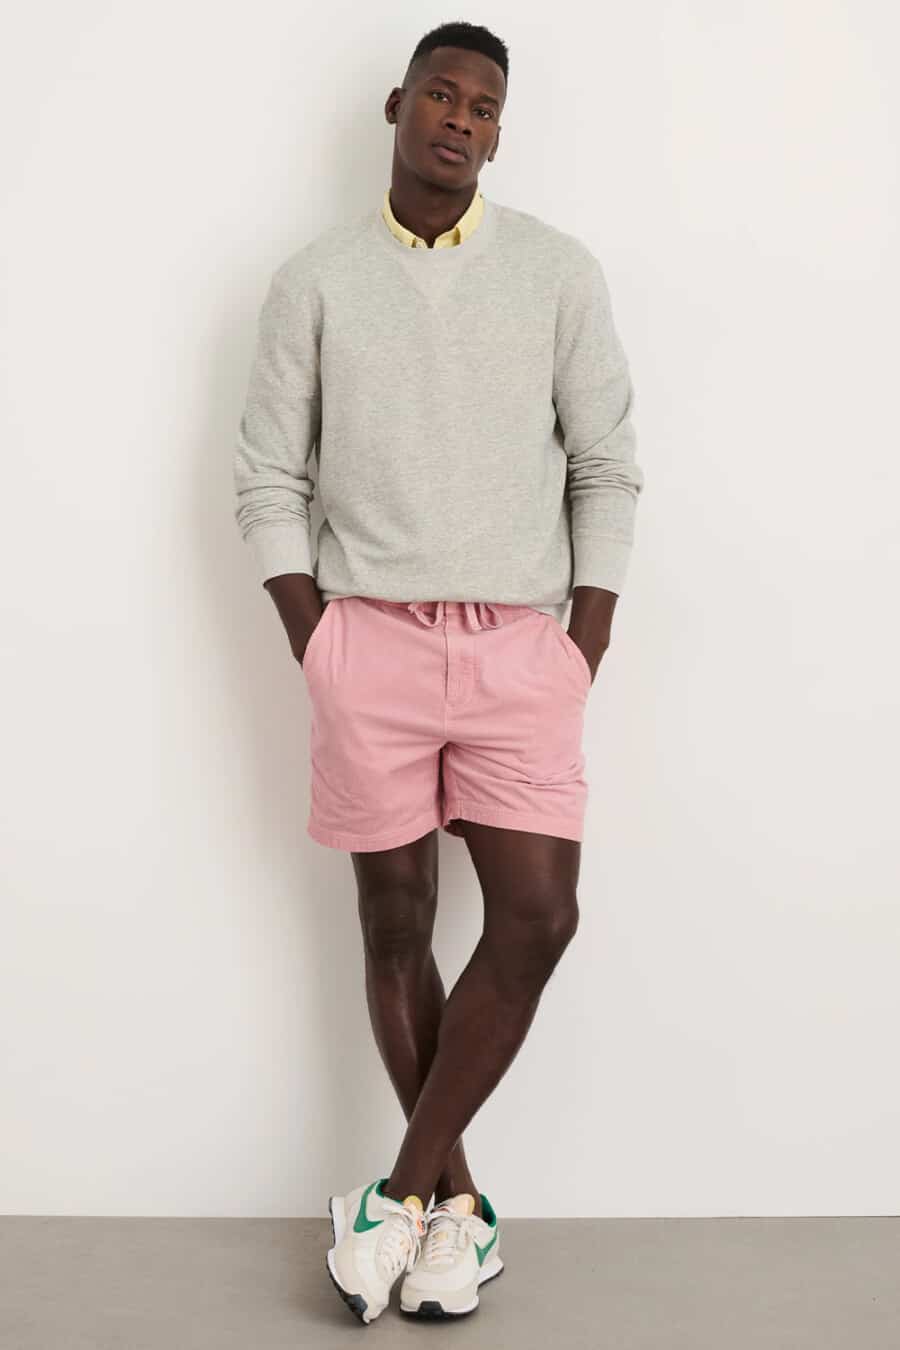 Men's pink drawstring shorts, yellow Oxford shirt, grey crew neck sweatshirt and Nike running sneakers outfit